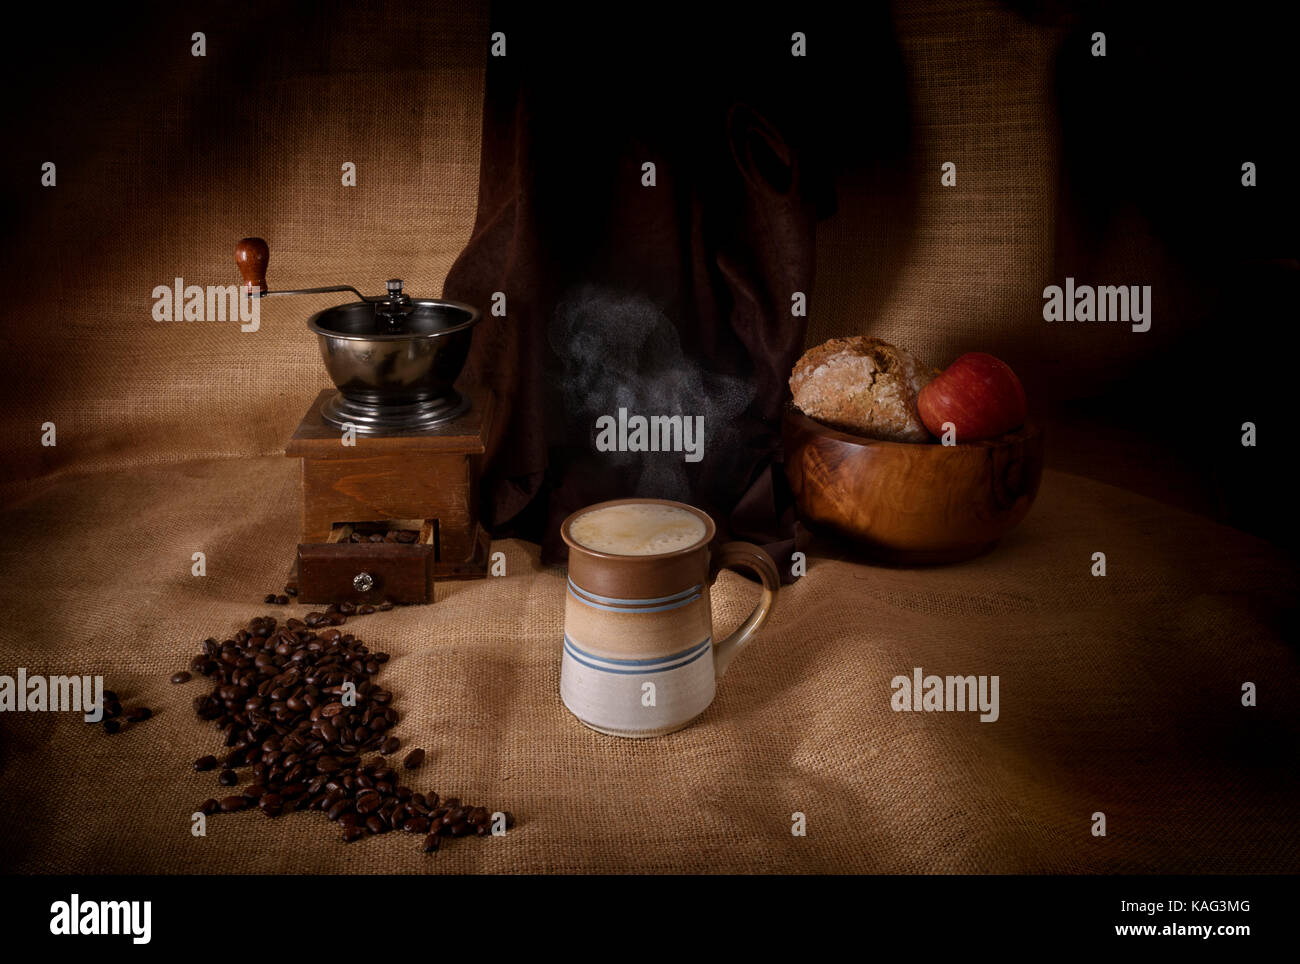 La cottura a vapore bevanda calda di caffè in una tazza accanto al macinino da caffè e caffè in grani Foto Stock